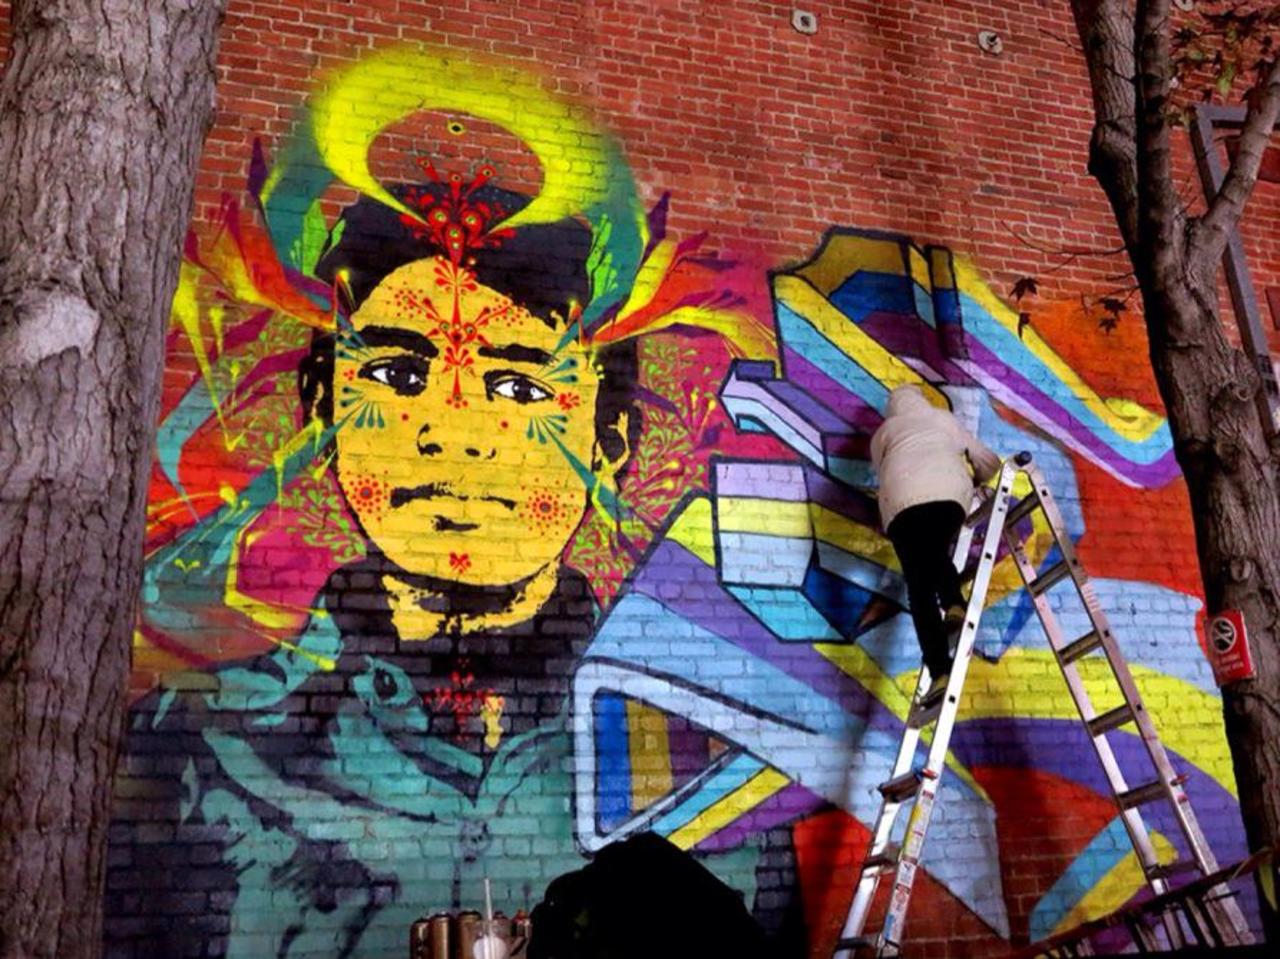 Artist at work, street art by Stinkfish
http://streetartnews.net/search/label/Stinkfish
#graffiti #streetart #mural #Columbia #USA http://t.co/bHDsspgZKA